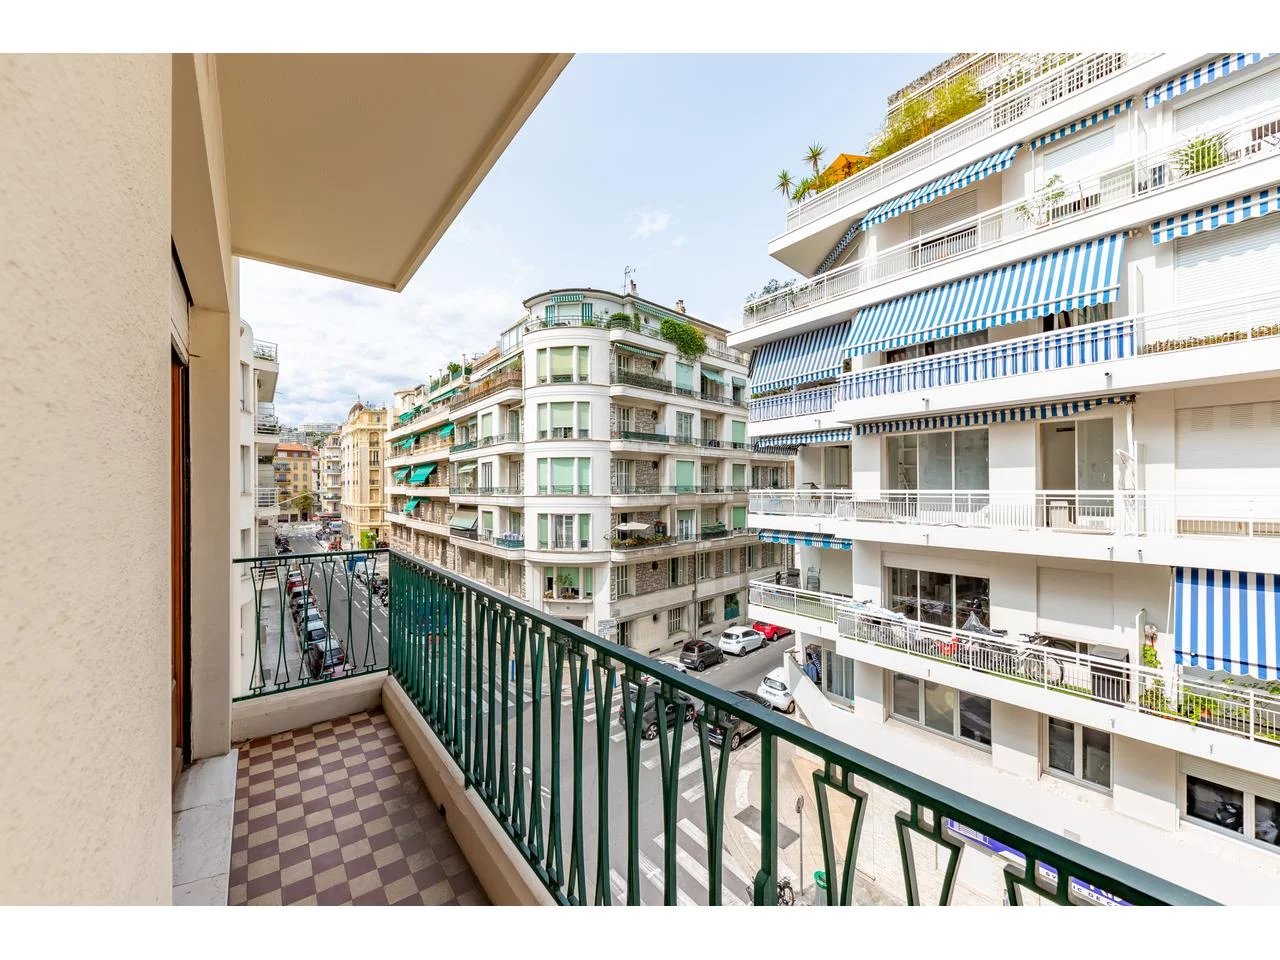 Appartement  3 Locali 74.07m2  In vendita   420 000 €